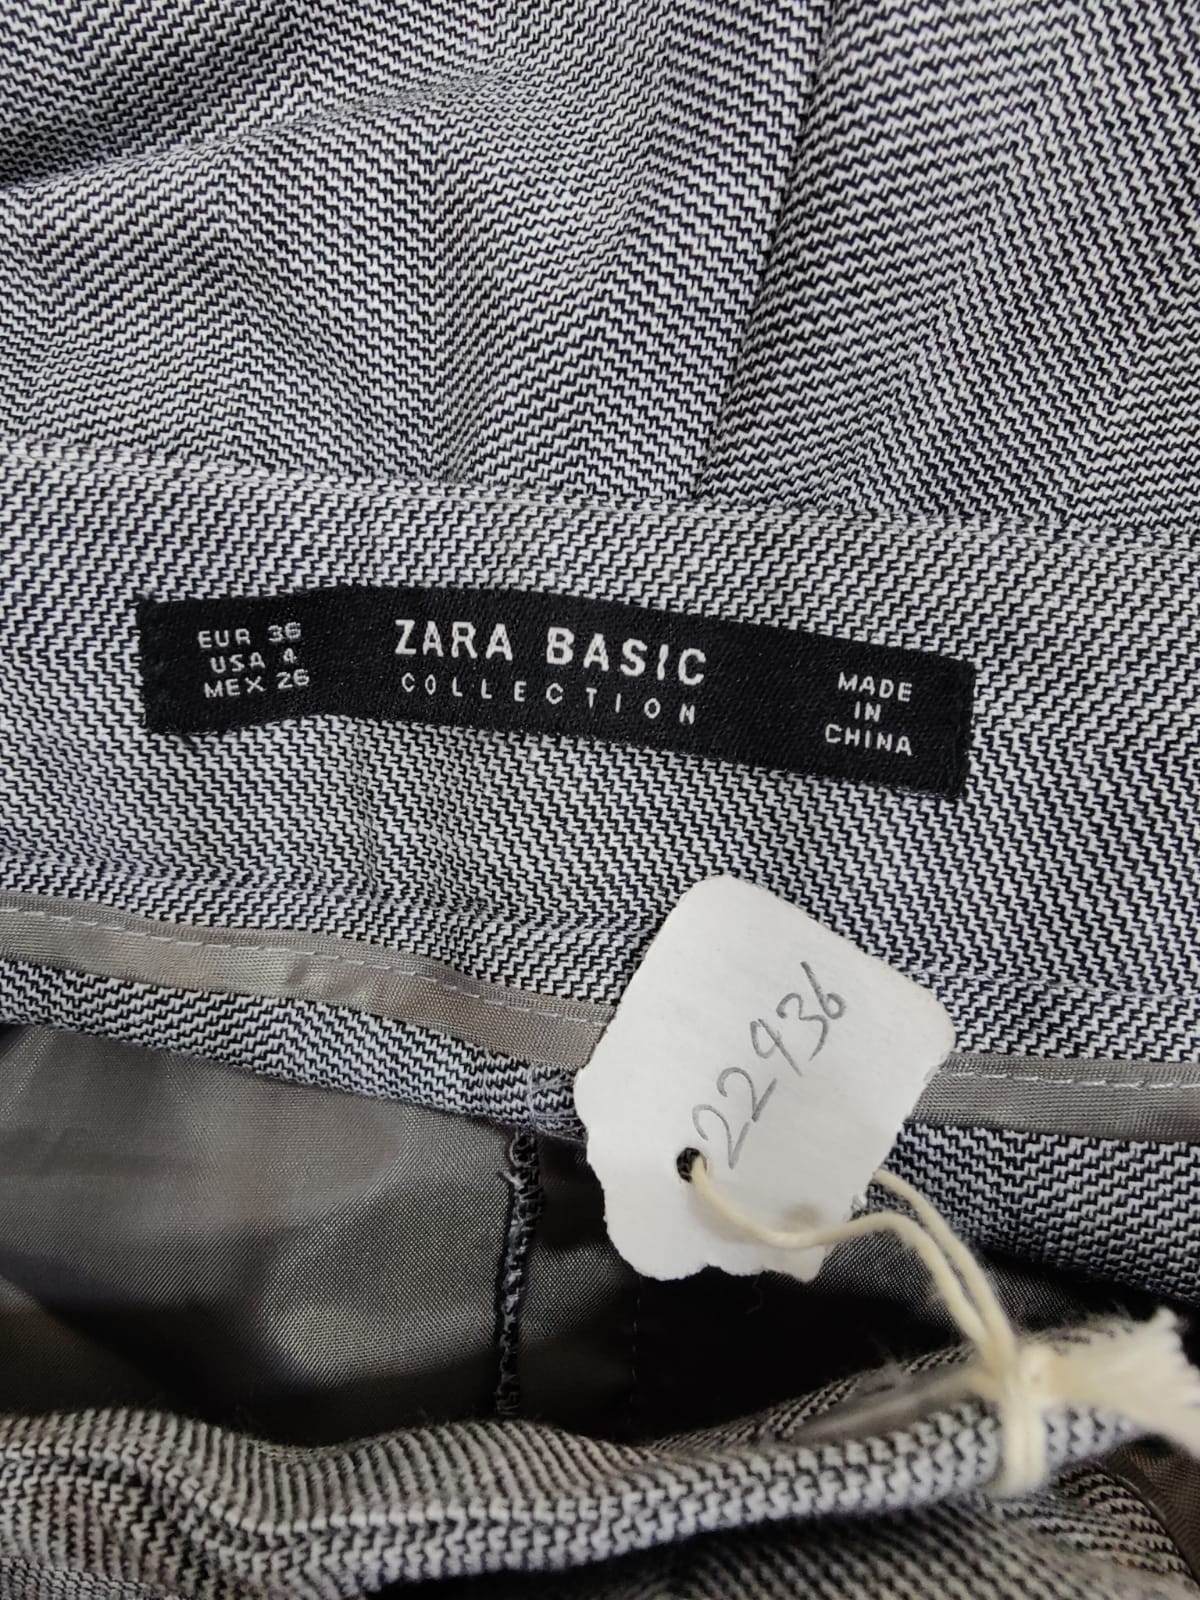 ZARA Grey Pants with Pockets